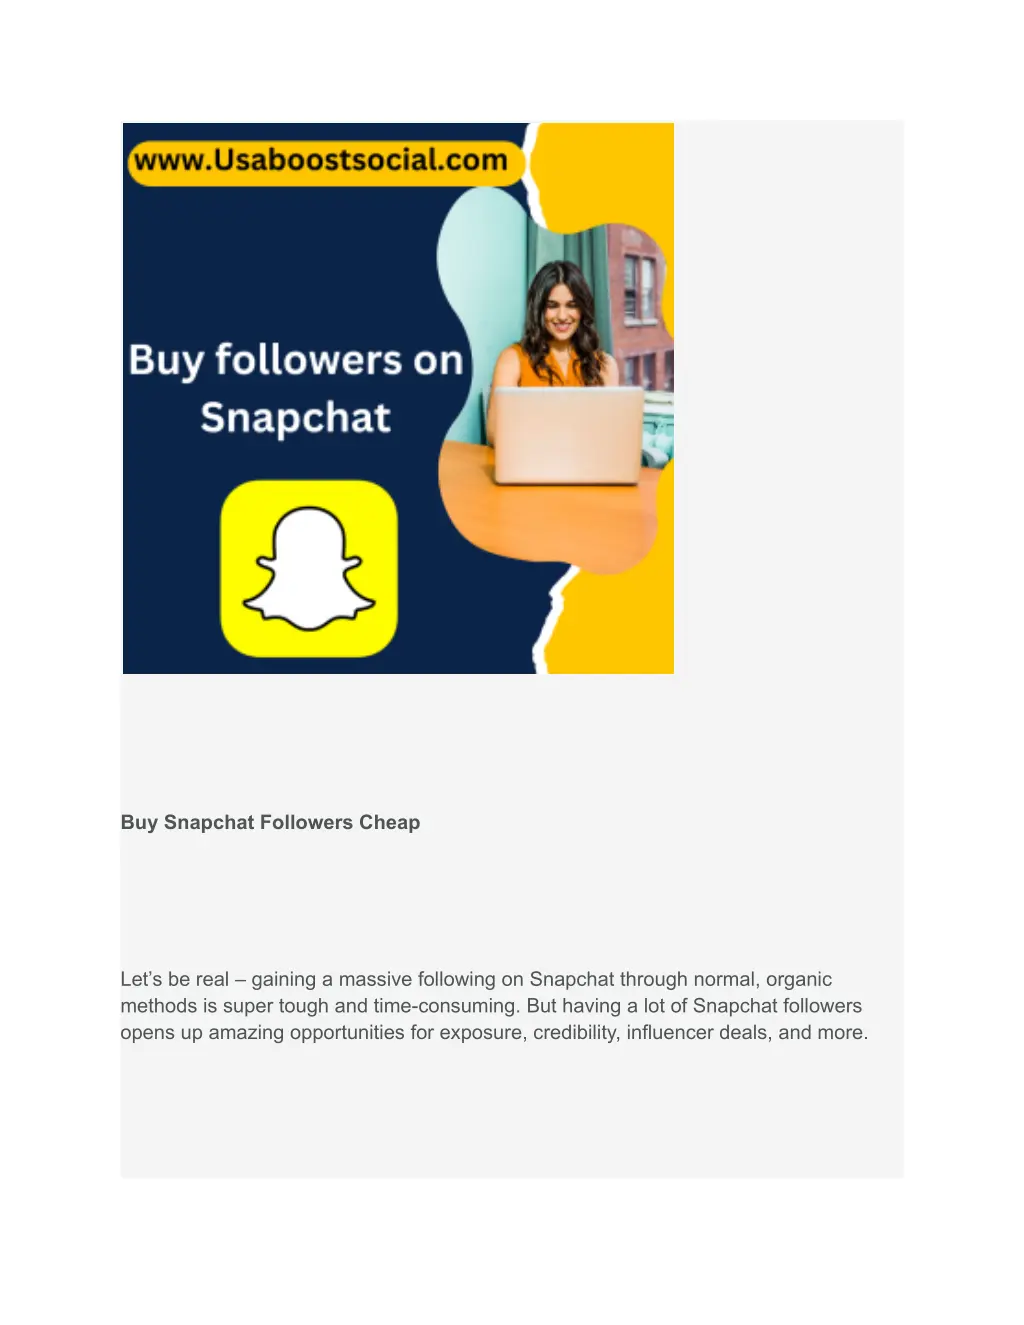 buy snapchat followers cheap